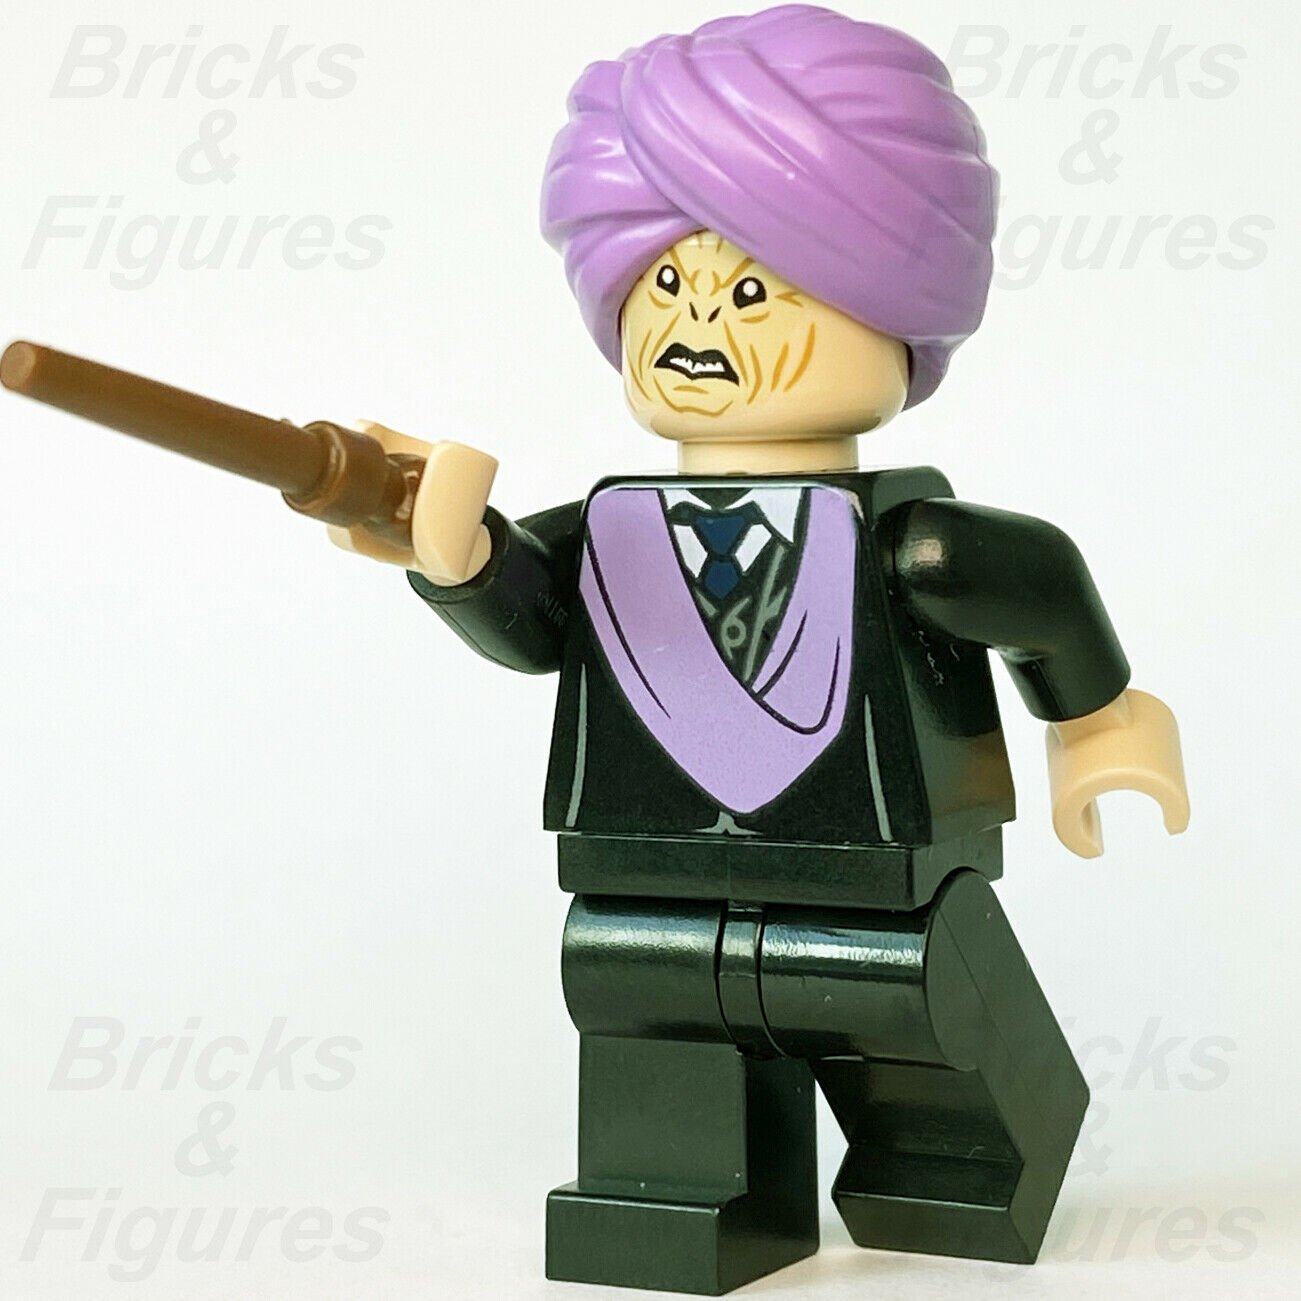 New Harry Potter LEGO Professor Quirinus Quirrell Wizard Minifigure 75954 - Bricks & Figures